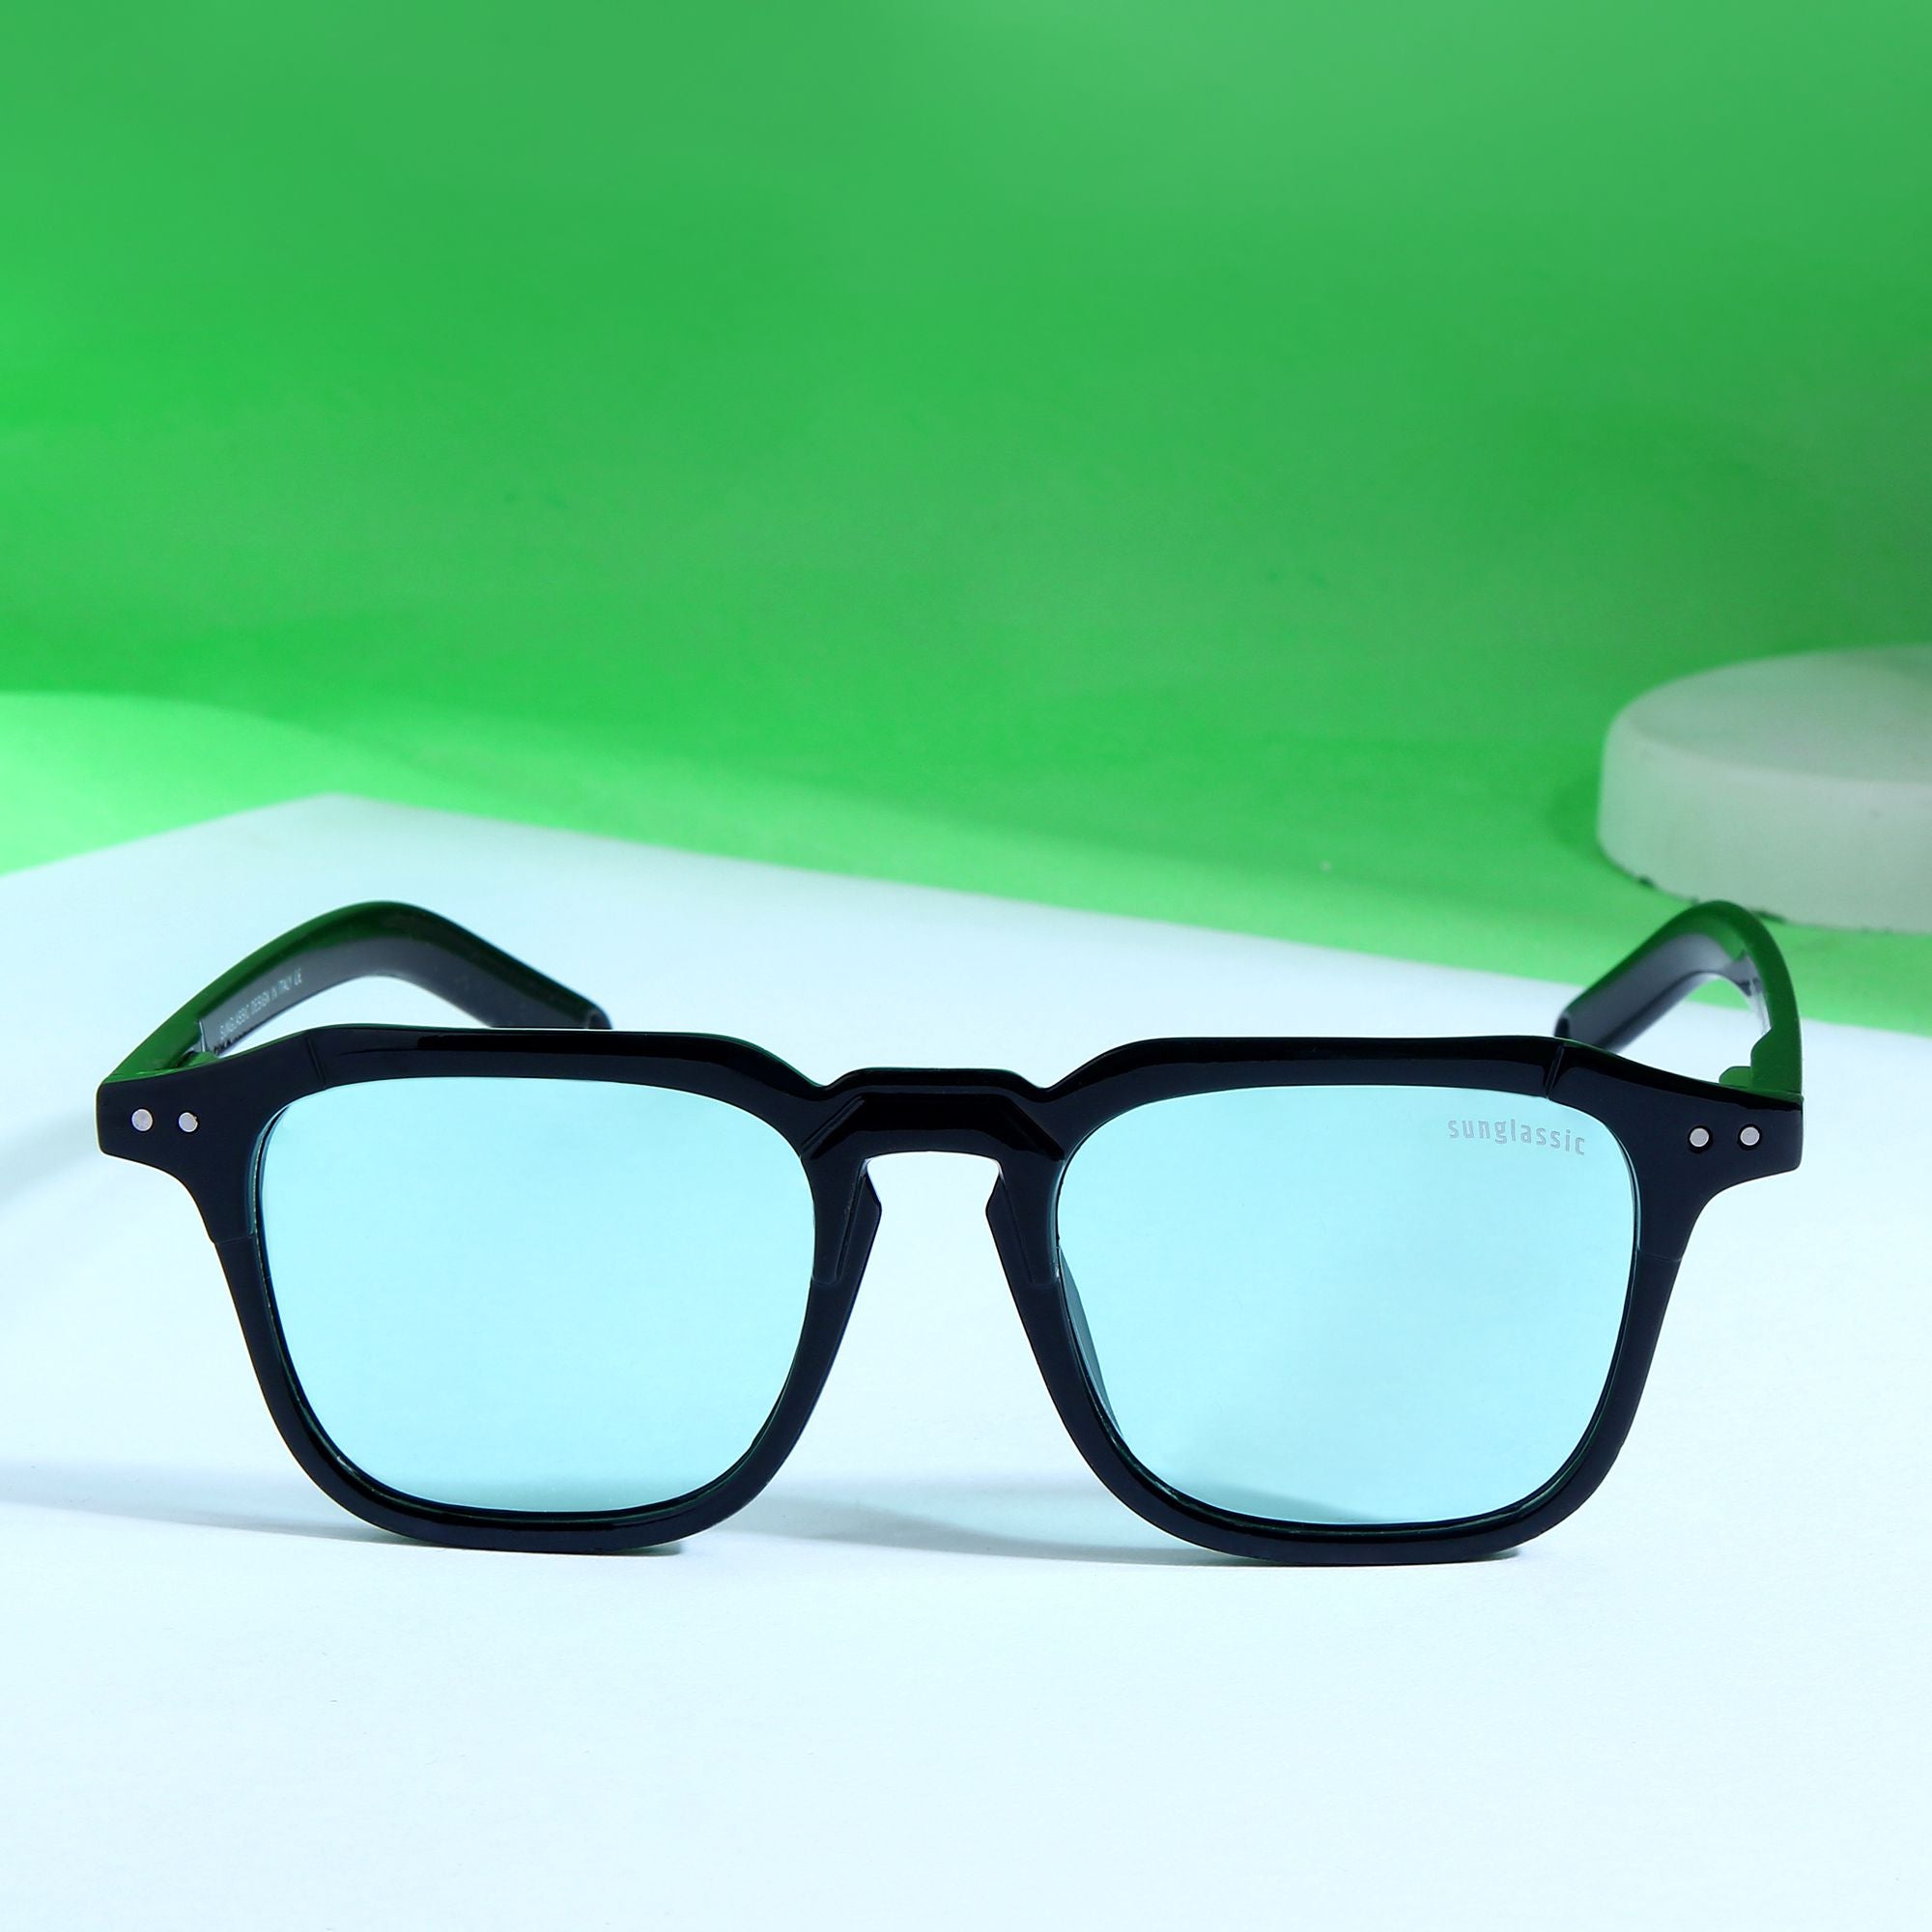 "Kingsman black green square sunglasses front view - Sunglassic